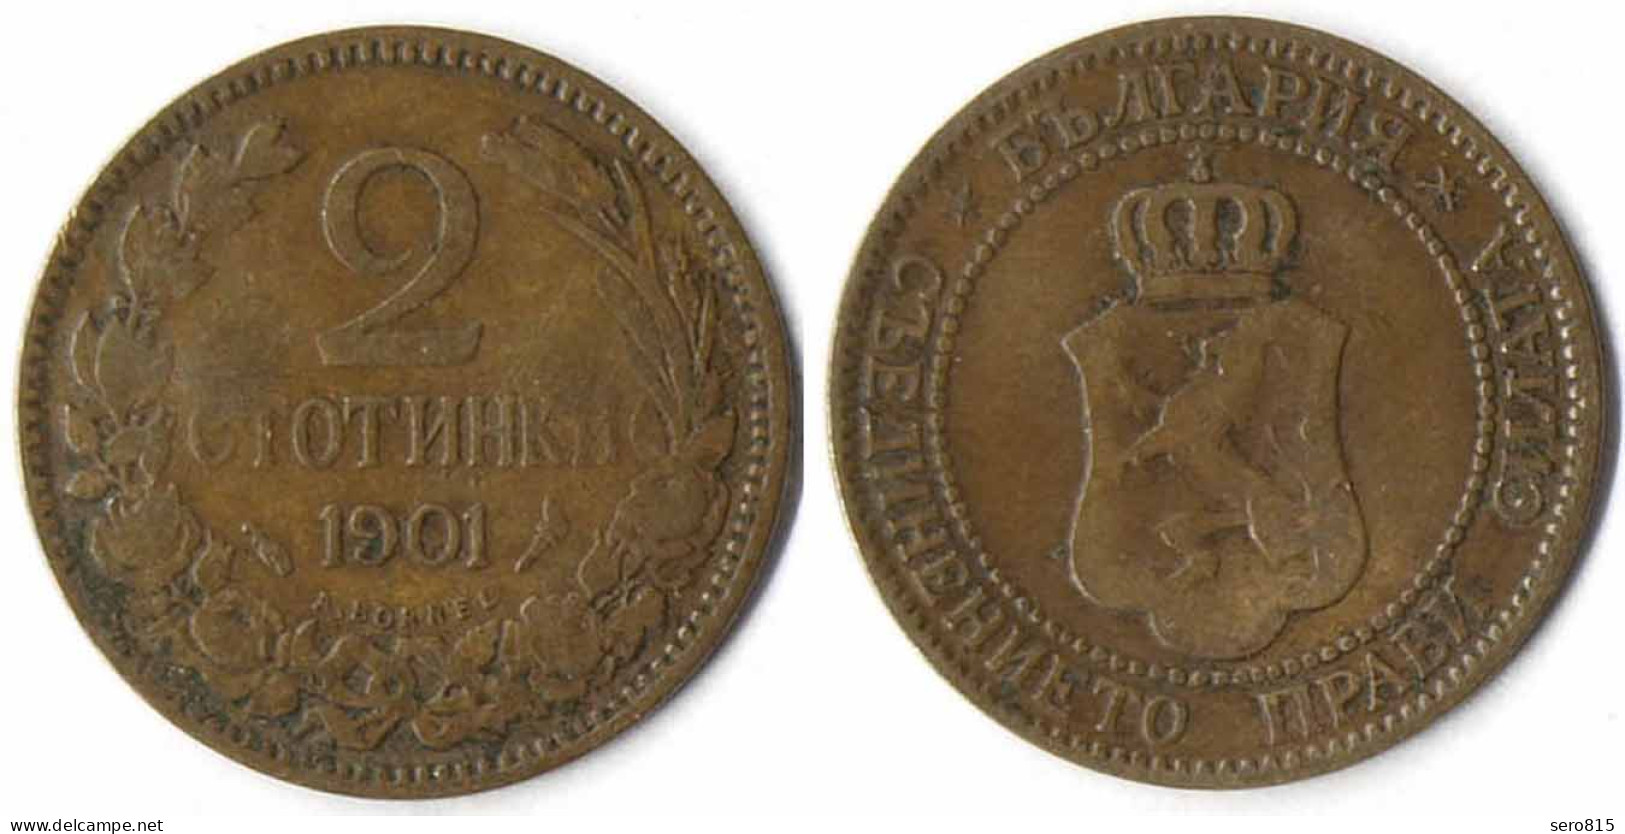 Bulgarien - Bulgaria 2 Stotinki Münze 1901   (r1184 - Andere - Europa